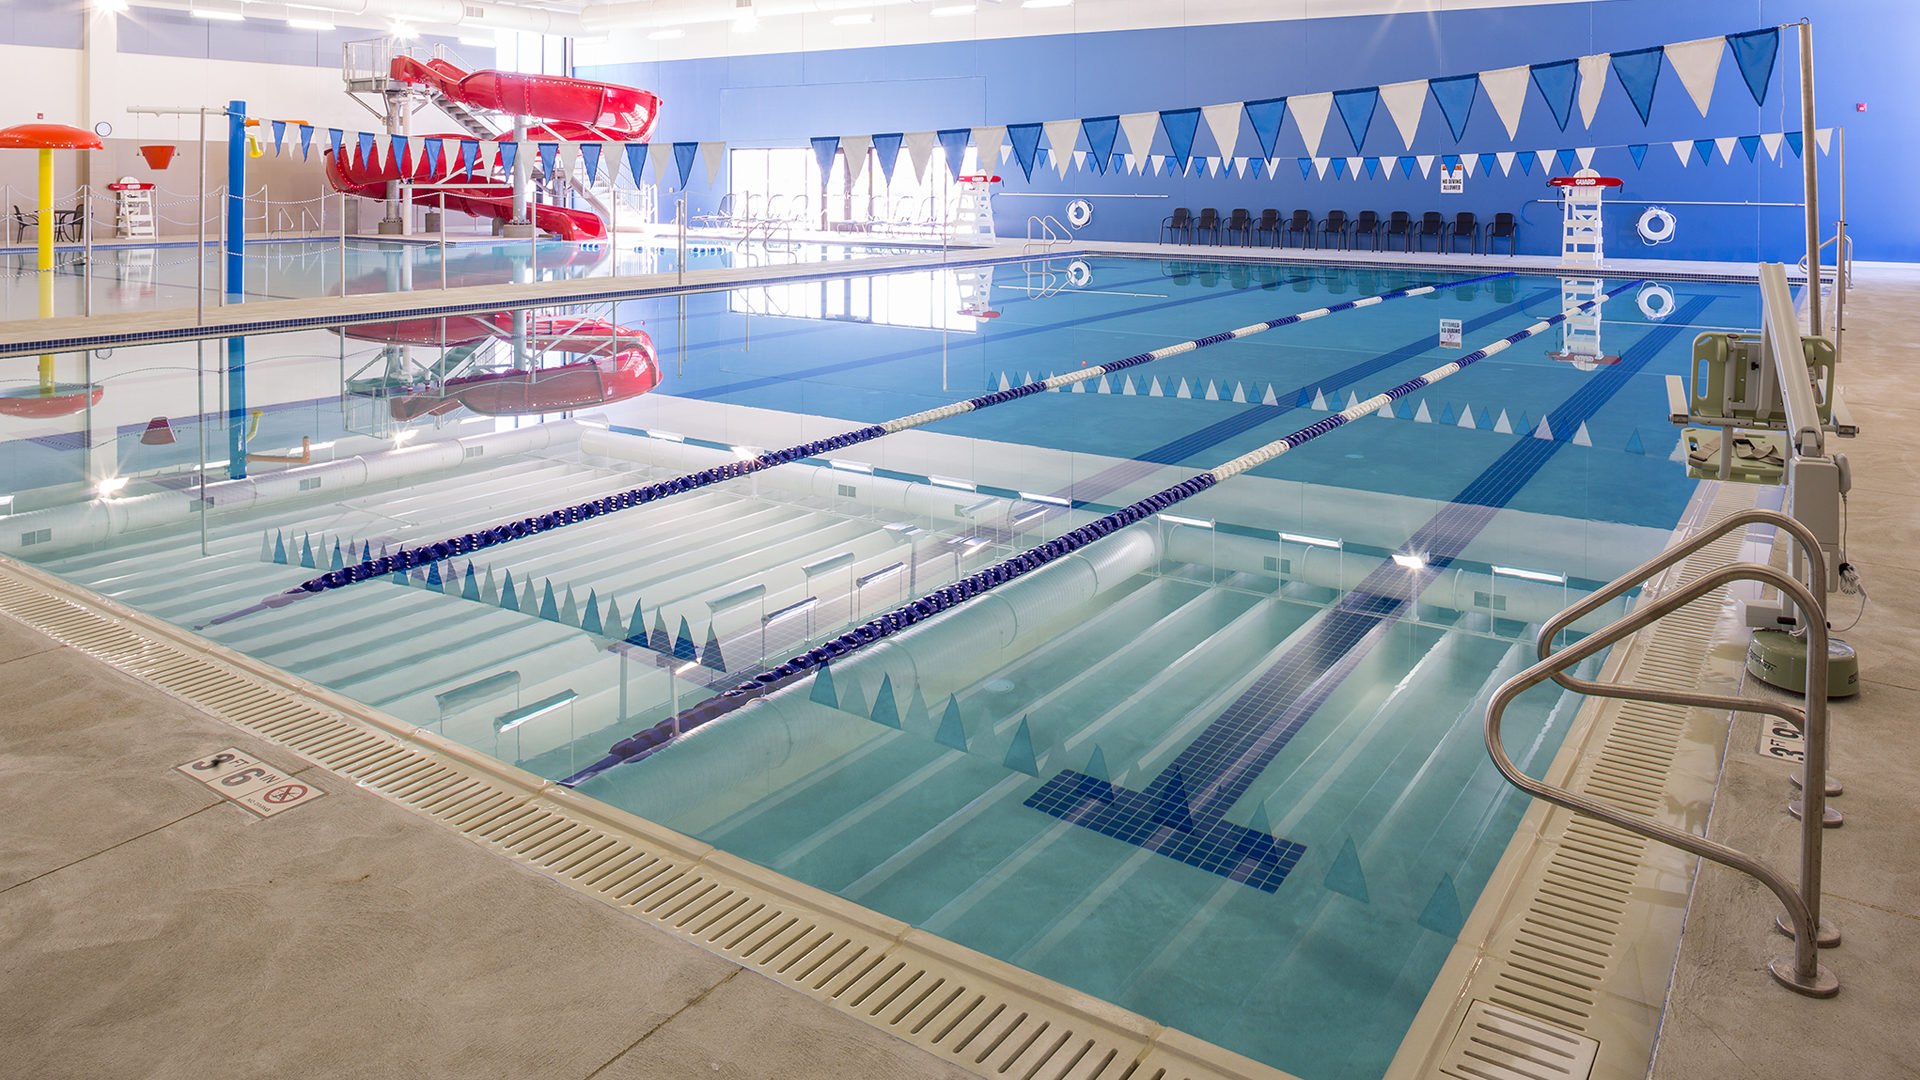 Maslowski Wellness and Research Center Wadena MN Interior Pool and Splash Pad